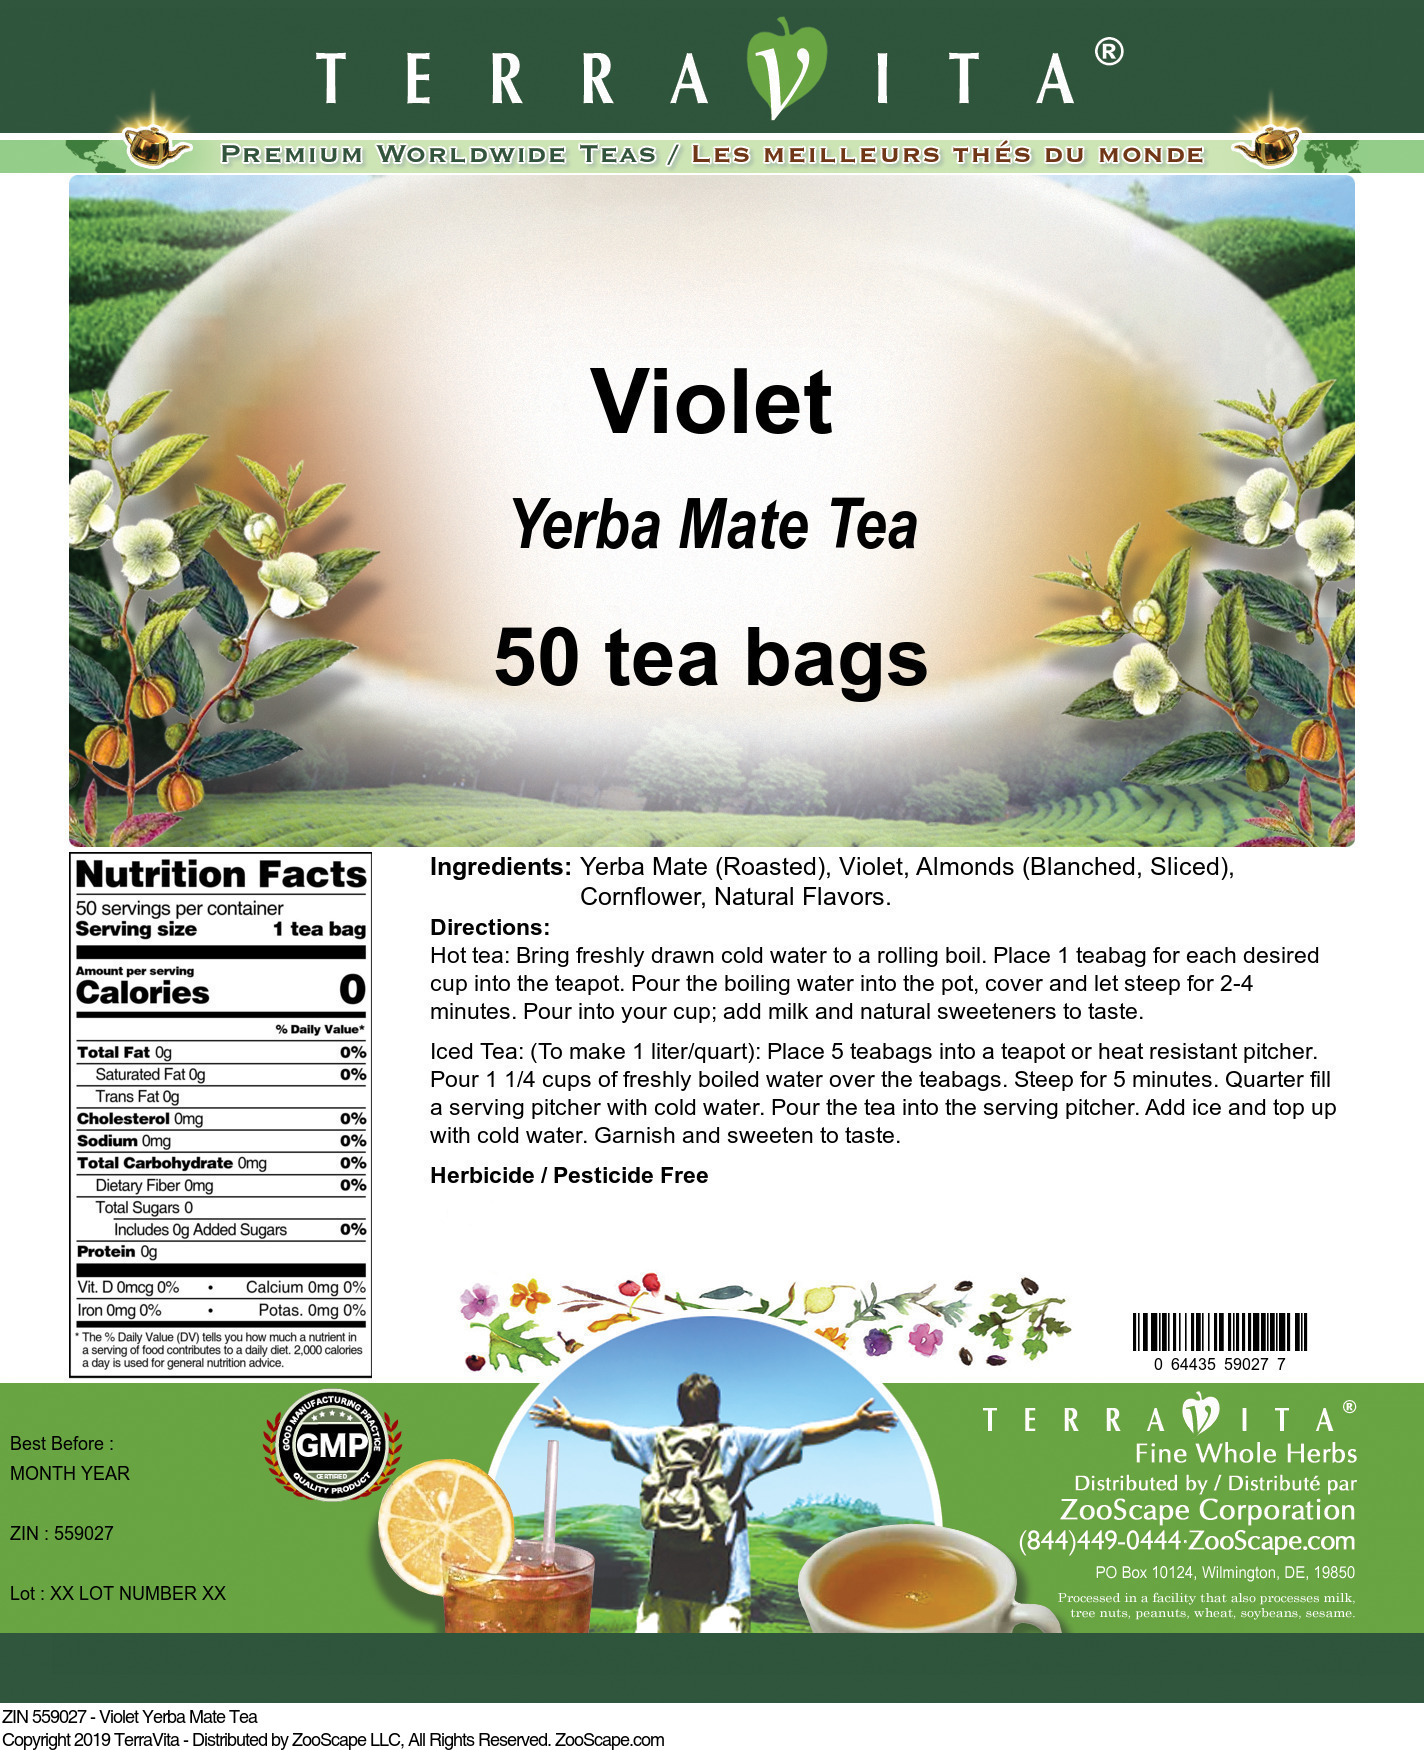 Violet Yerba Mate Tea - Label